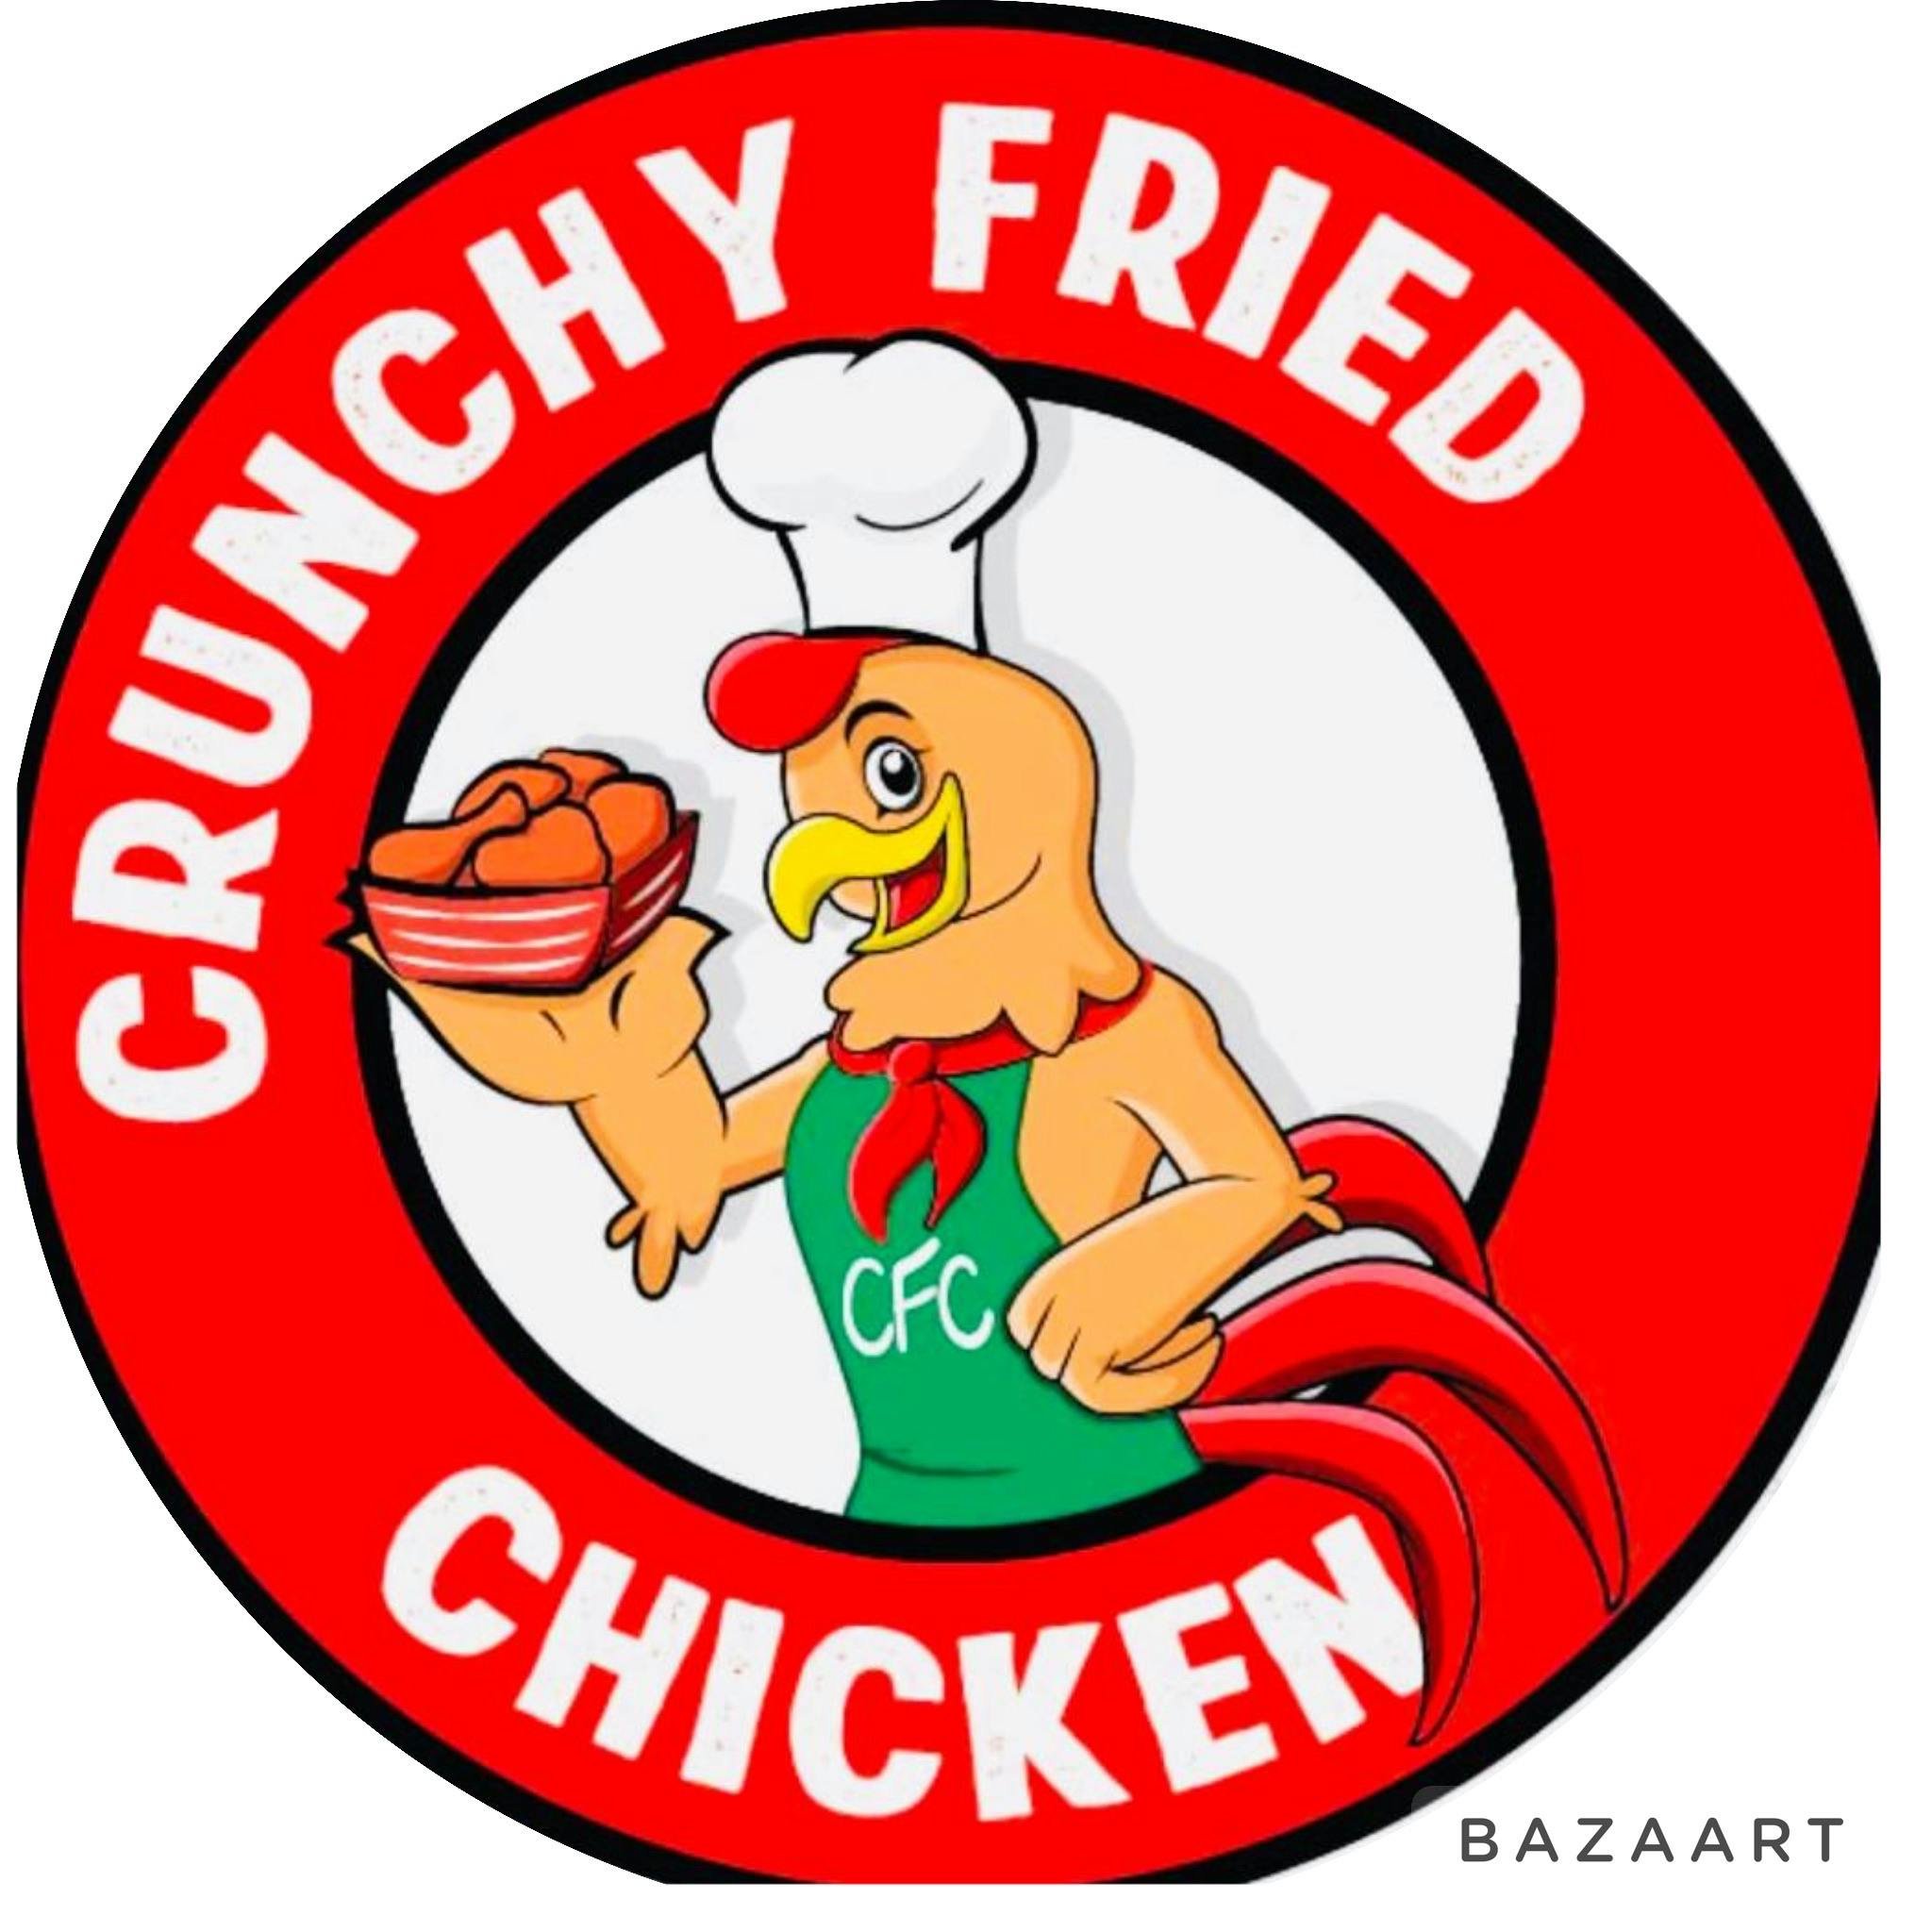 Crunchy Fried Chicken